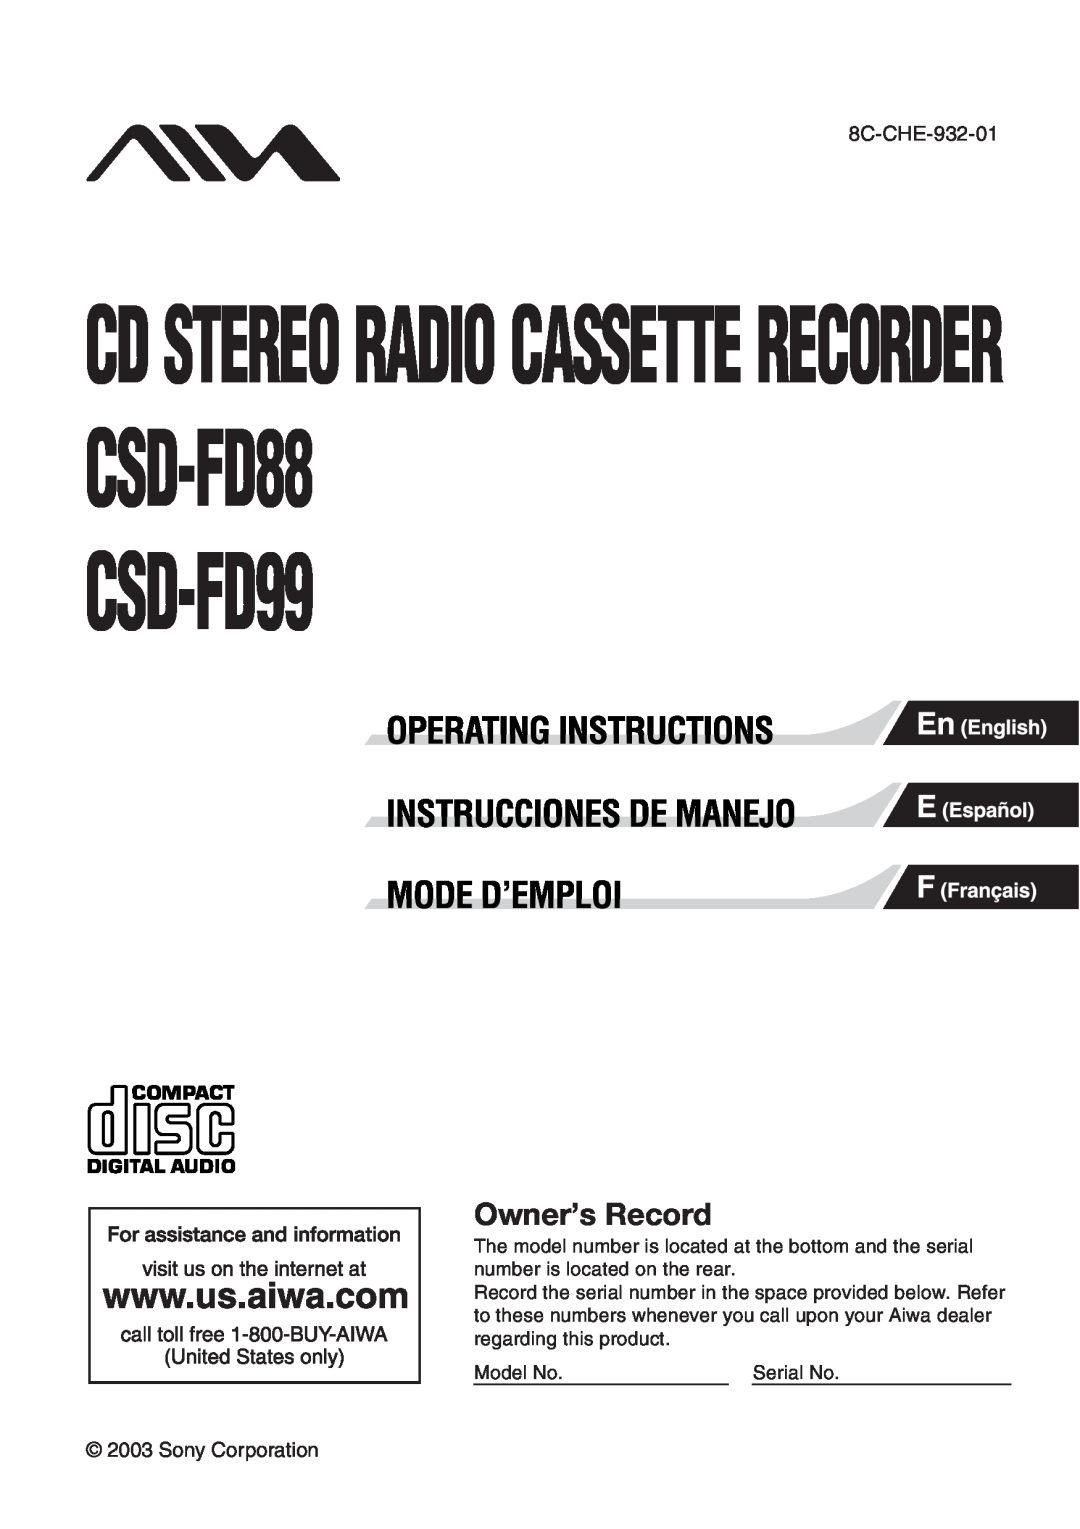 Aiwa manual 8C-CHE-932-01, Sony Corporation, CSD-FD99, CD STEREO RADIO CASSETTE RECORDER CSD-FD88, Owner’s Record 